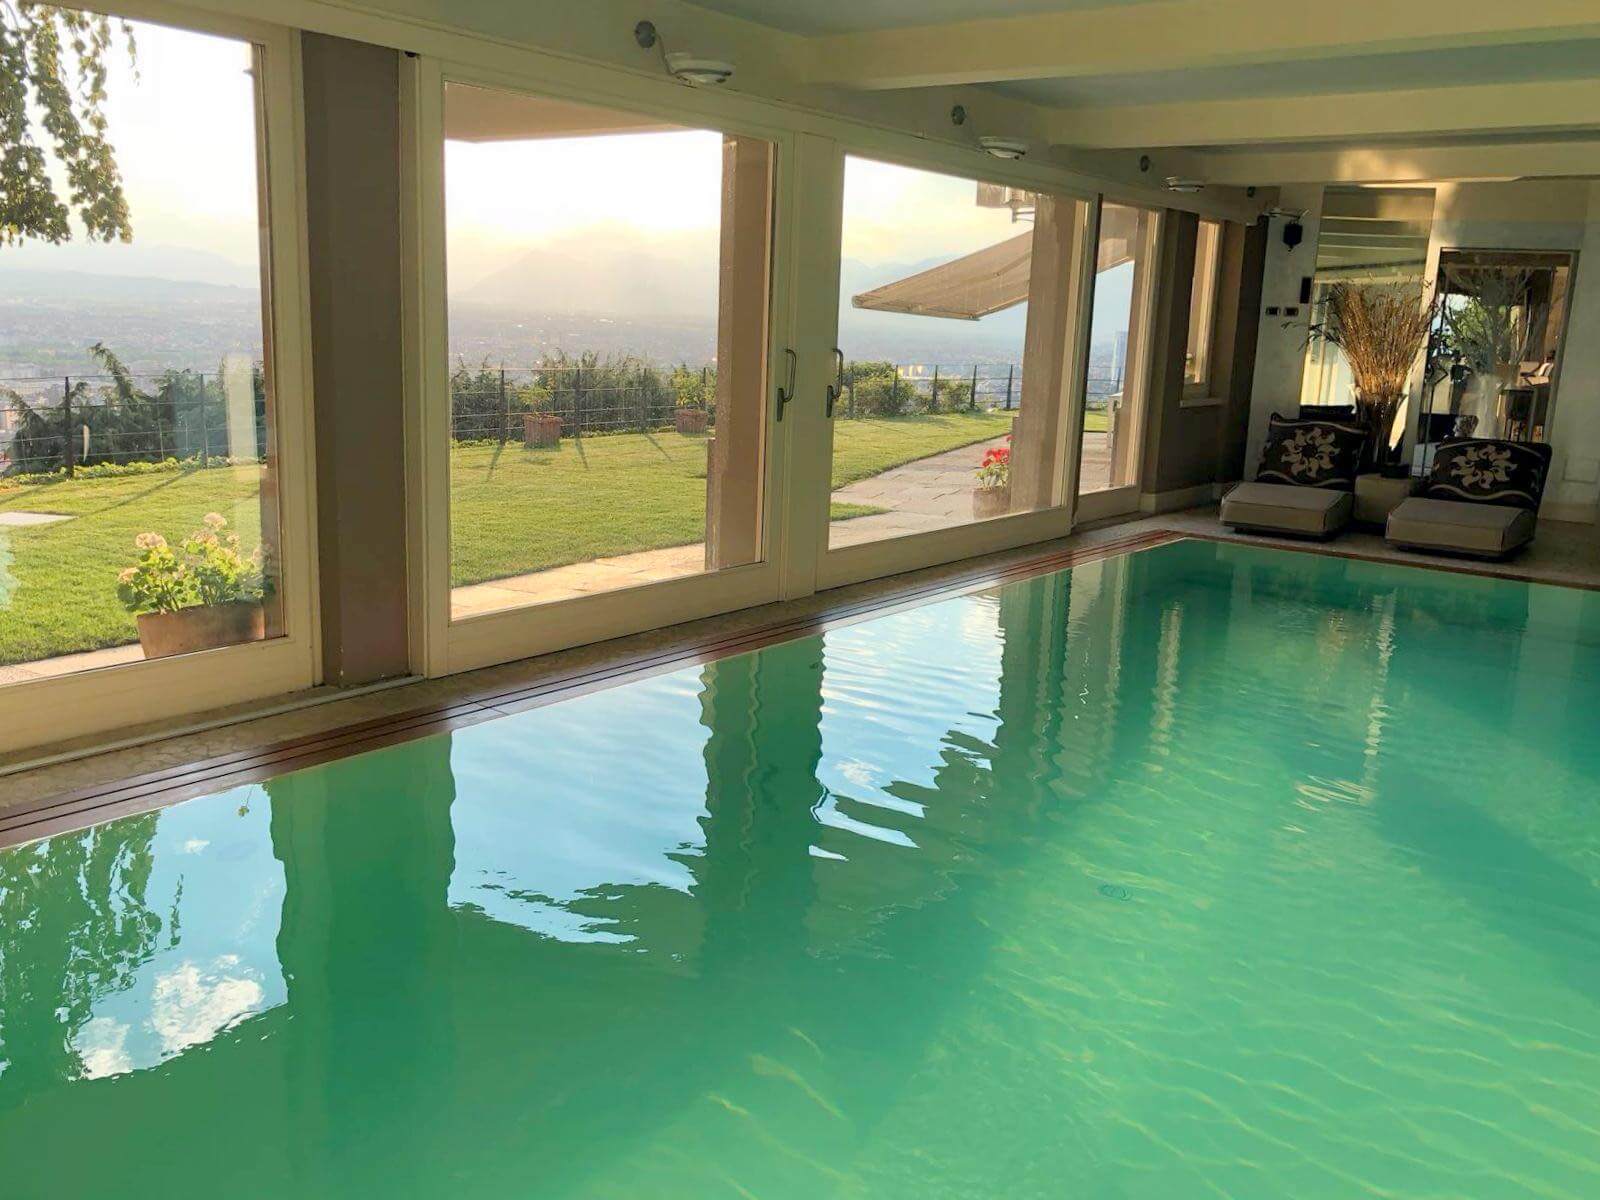 Splendida villa con piscina interna - Viale Seneca, San Vito - Torino